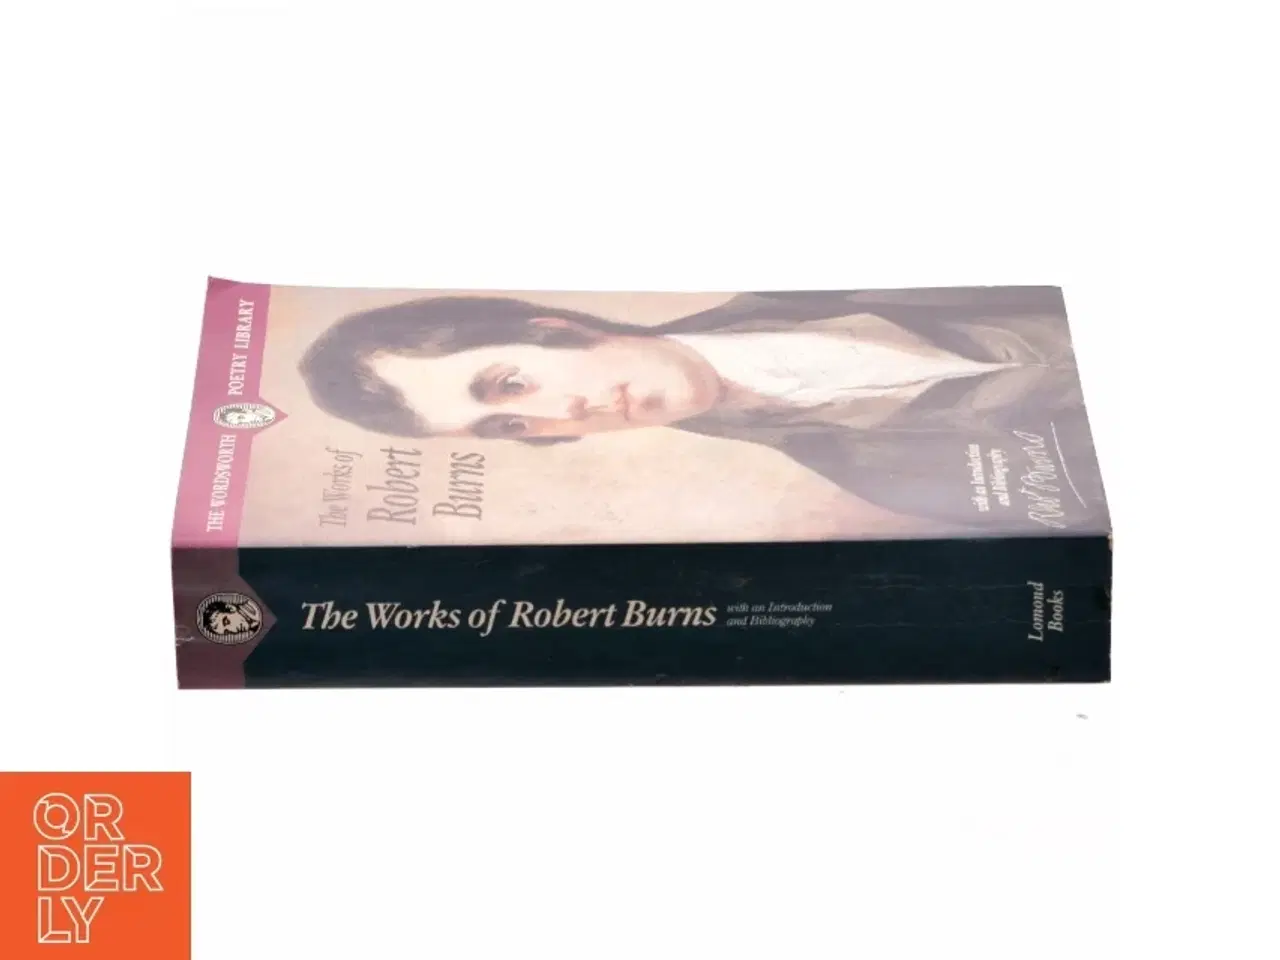 Billede 2 - The works of Robert Burns : with an introduction and bibliography af Robert Burns (Bog)